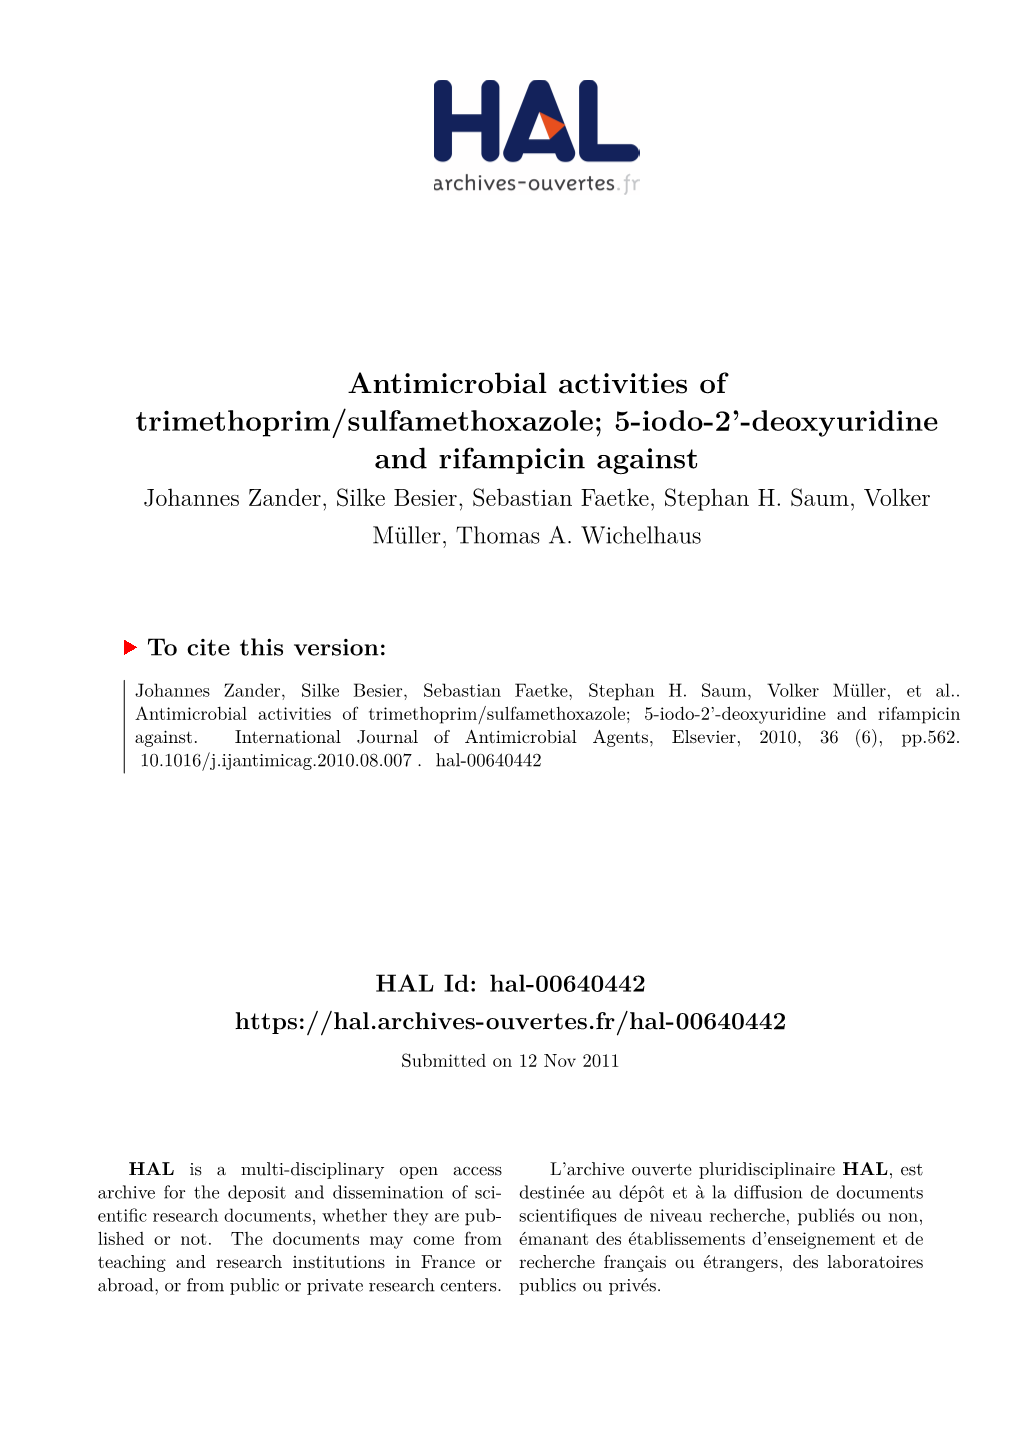 Antimicrobial Activities of Trimethoprim/Sulfamethoxazole; 5-Iodo-2’-Deoxyuridine and Rifampicin Against Johannes Zander, Silke Besier, Sebastian Faetke, Stephan H